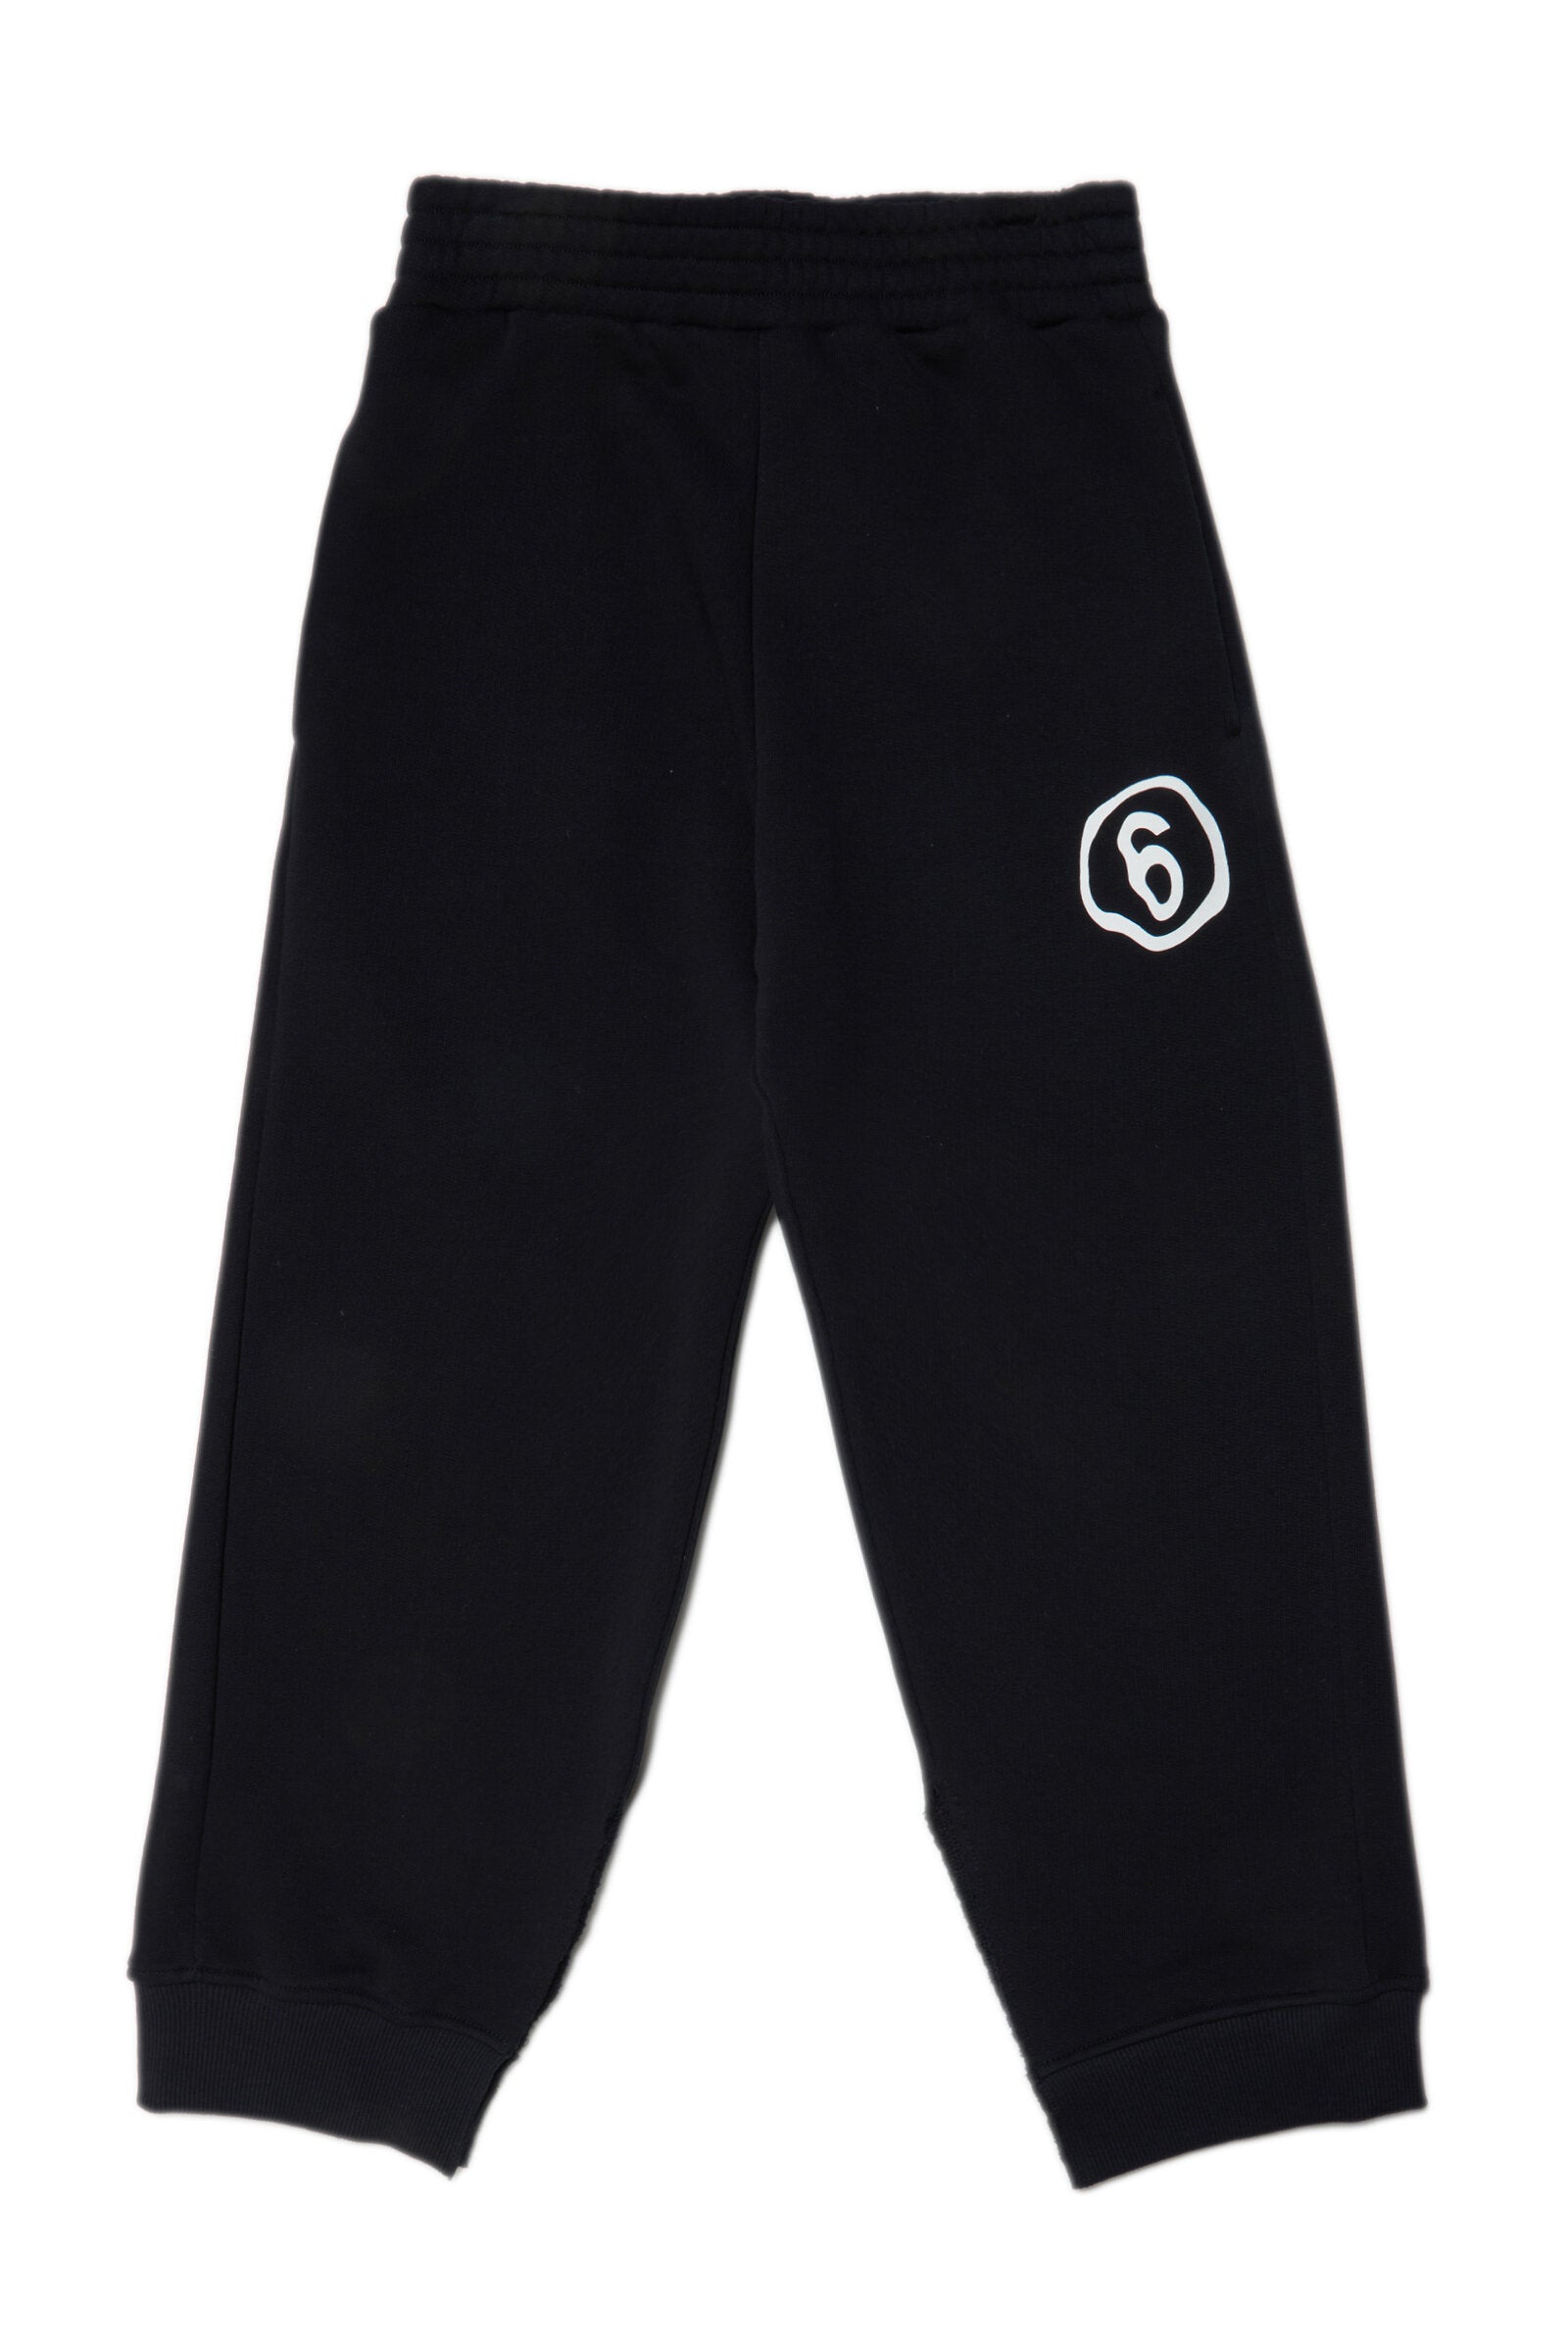 Black fleece pants with logo 6 and internal slits at the leg bottom